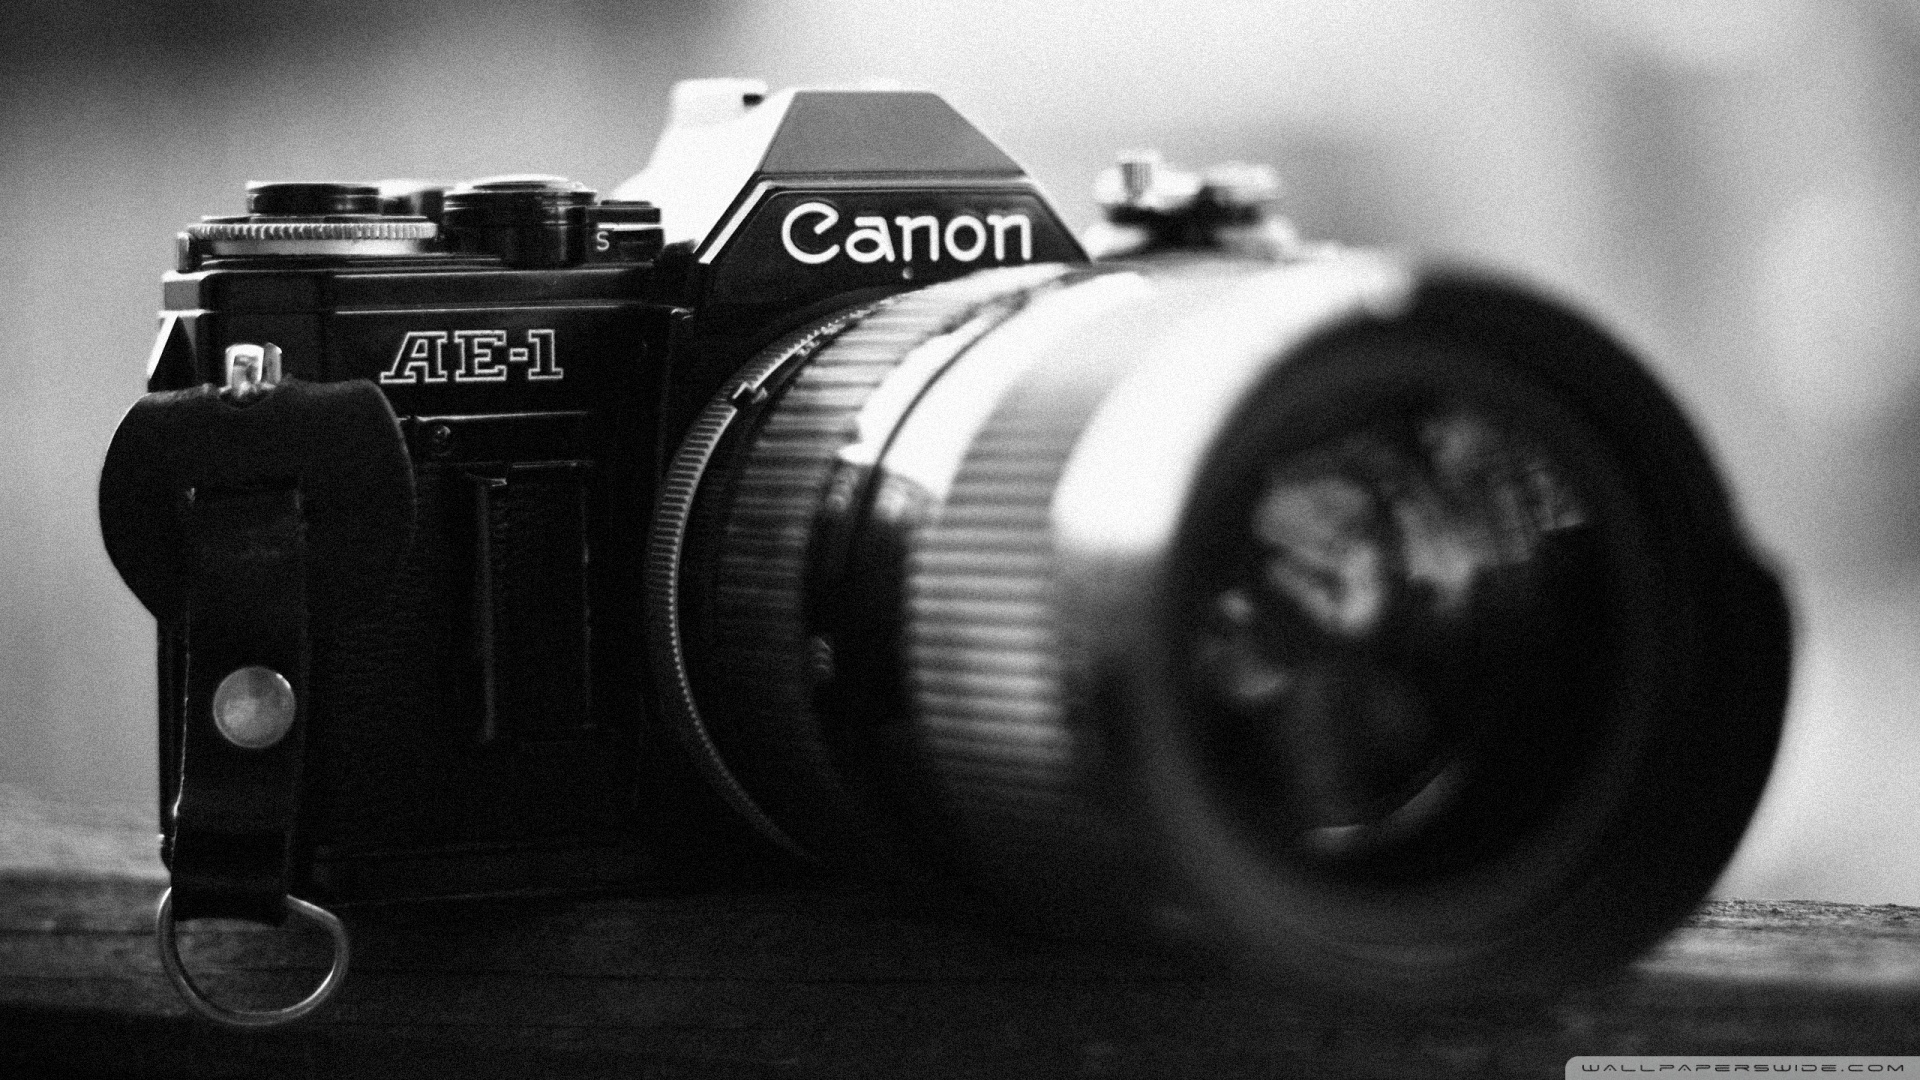 canon dslr camera wallpaper,camera,camera lens,camera accessory,cameras & optics,lens